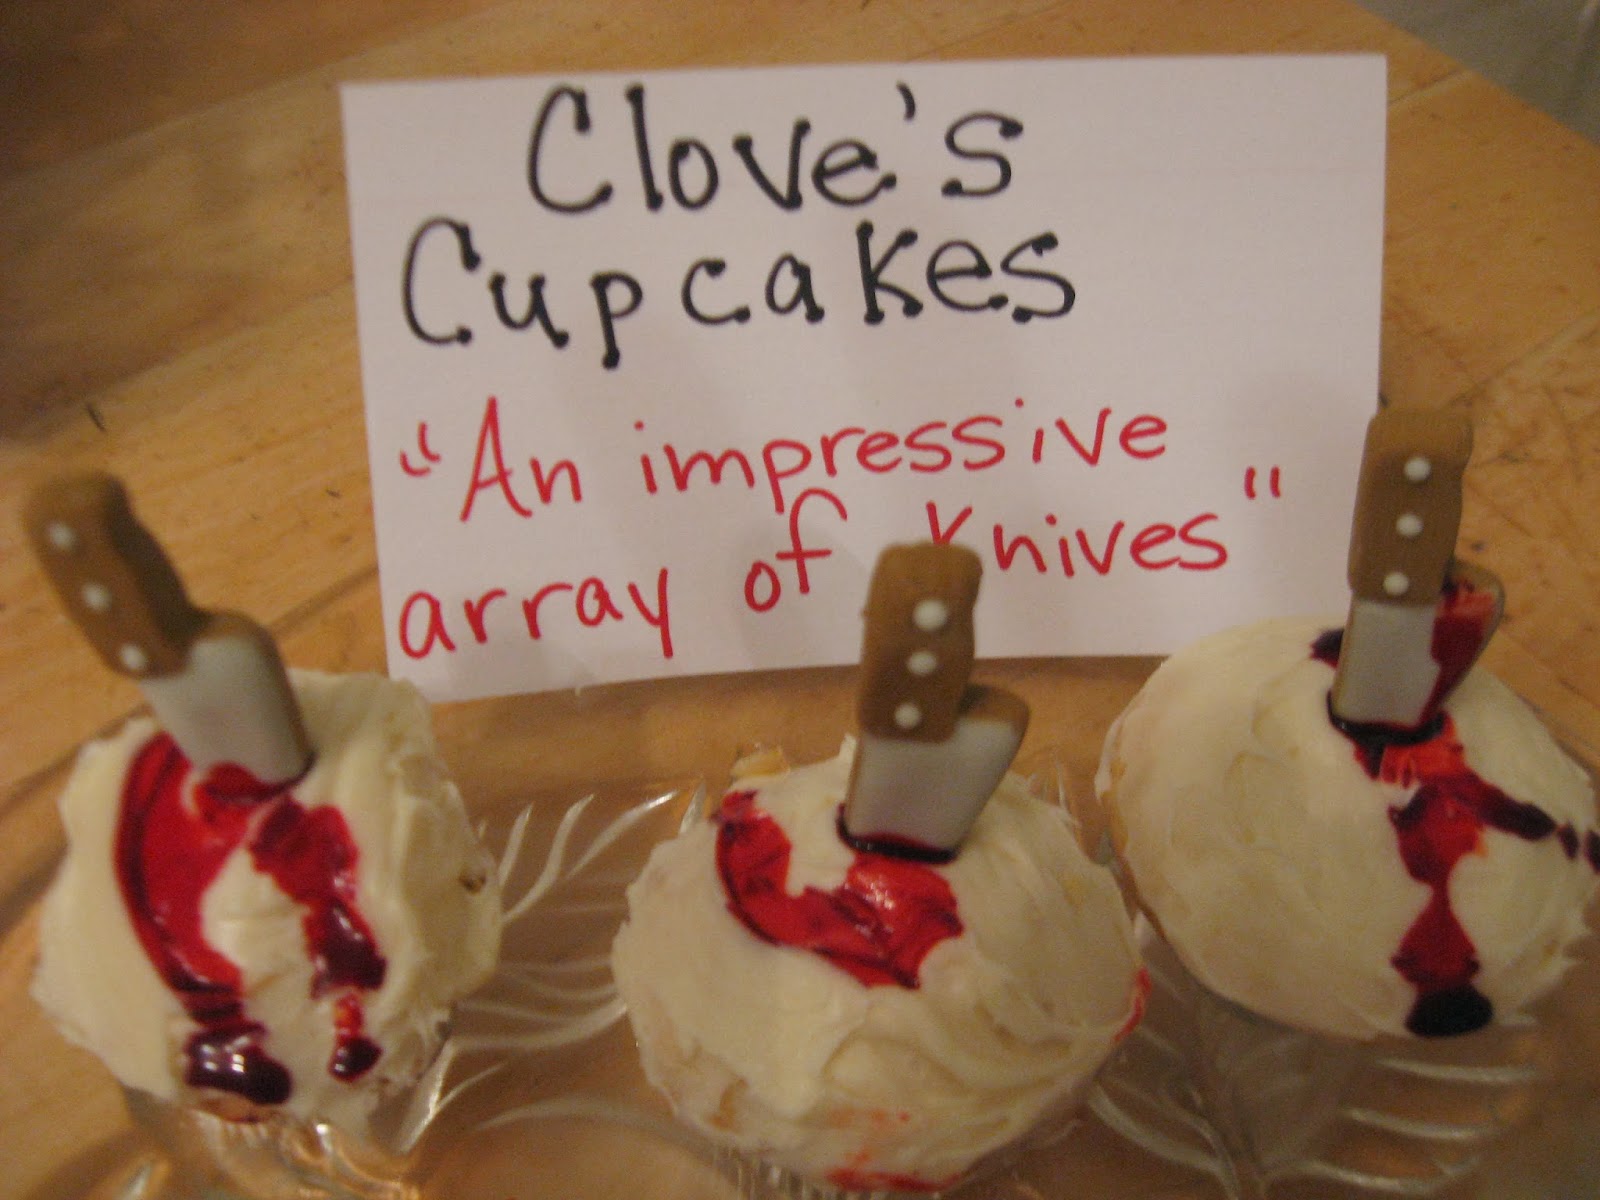 Clove's Cupcakes